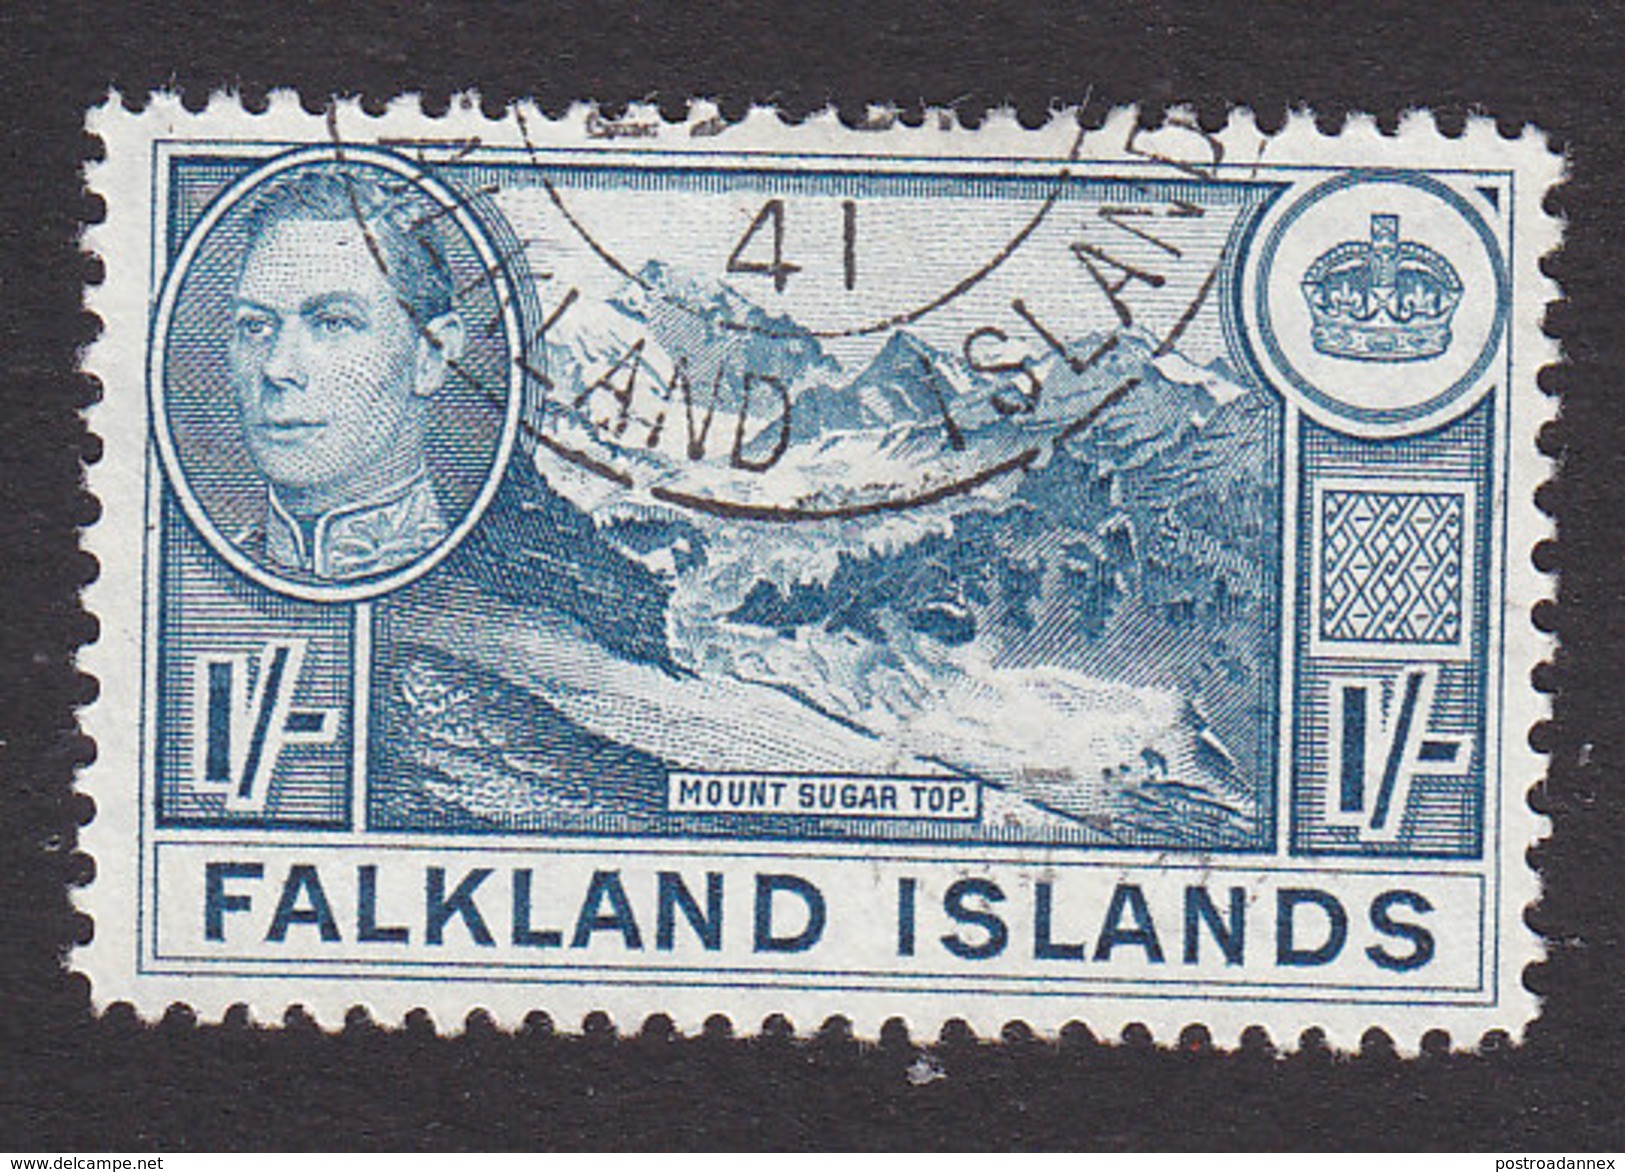 Falkland Islands, Scott #91, Used, George VI And Scenes Of Falkland Islands, Issued 1938 - Falklandeilanden